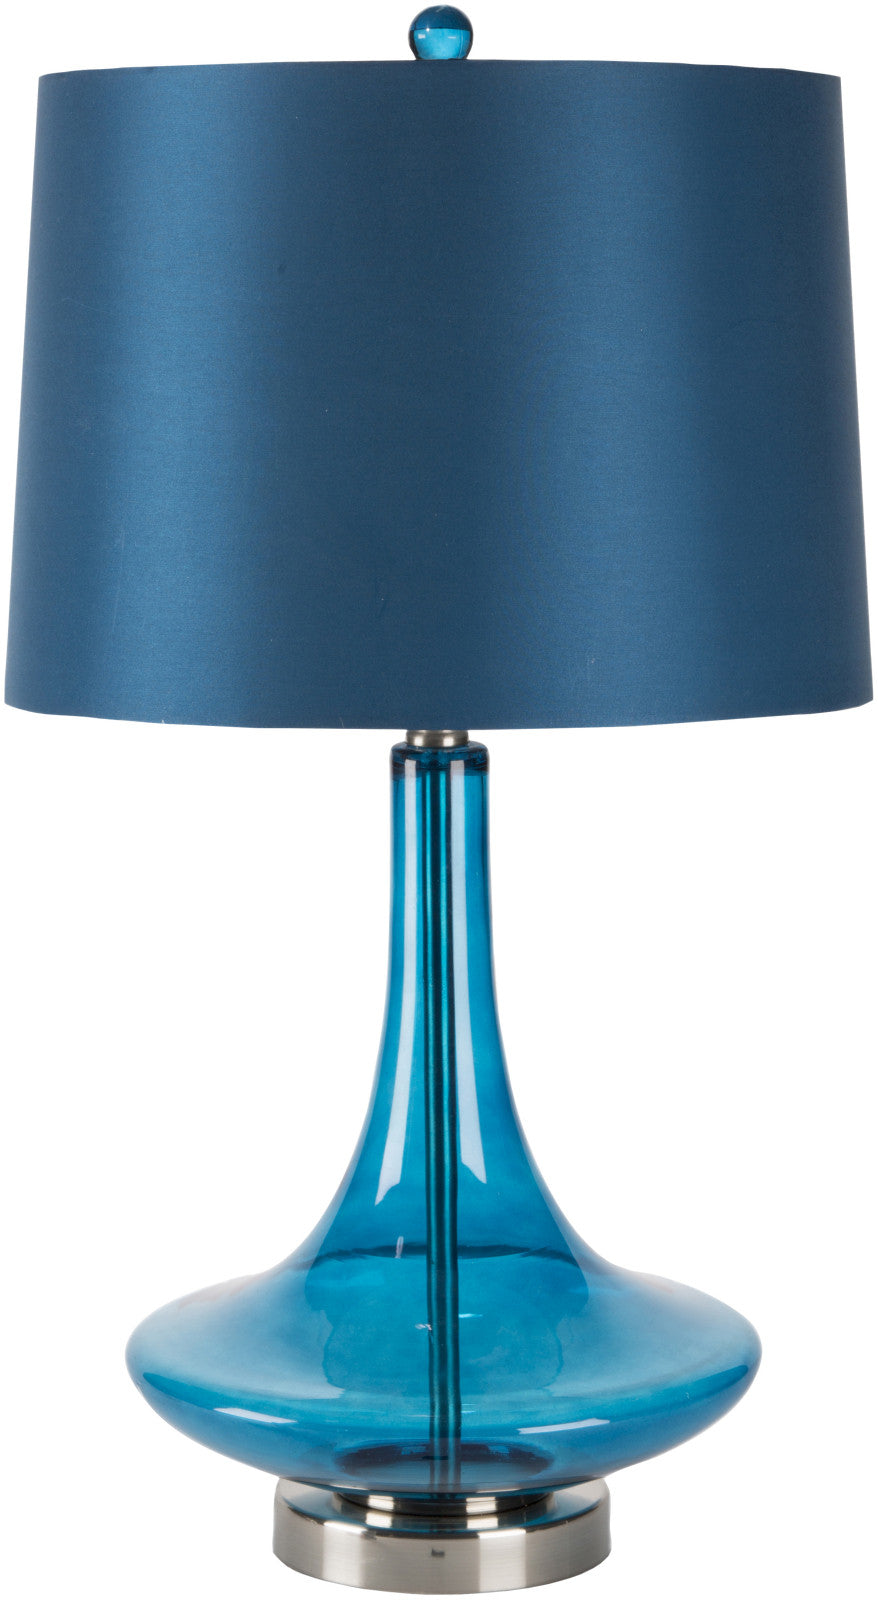 Surya Zoey ZOLP-001 Blue Lamp Table Lamp